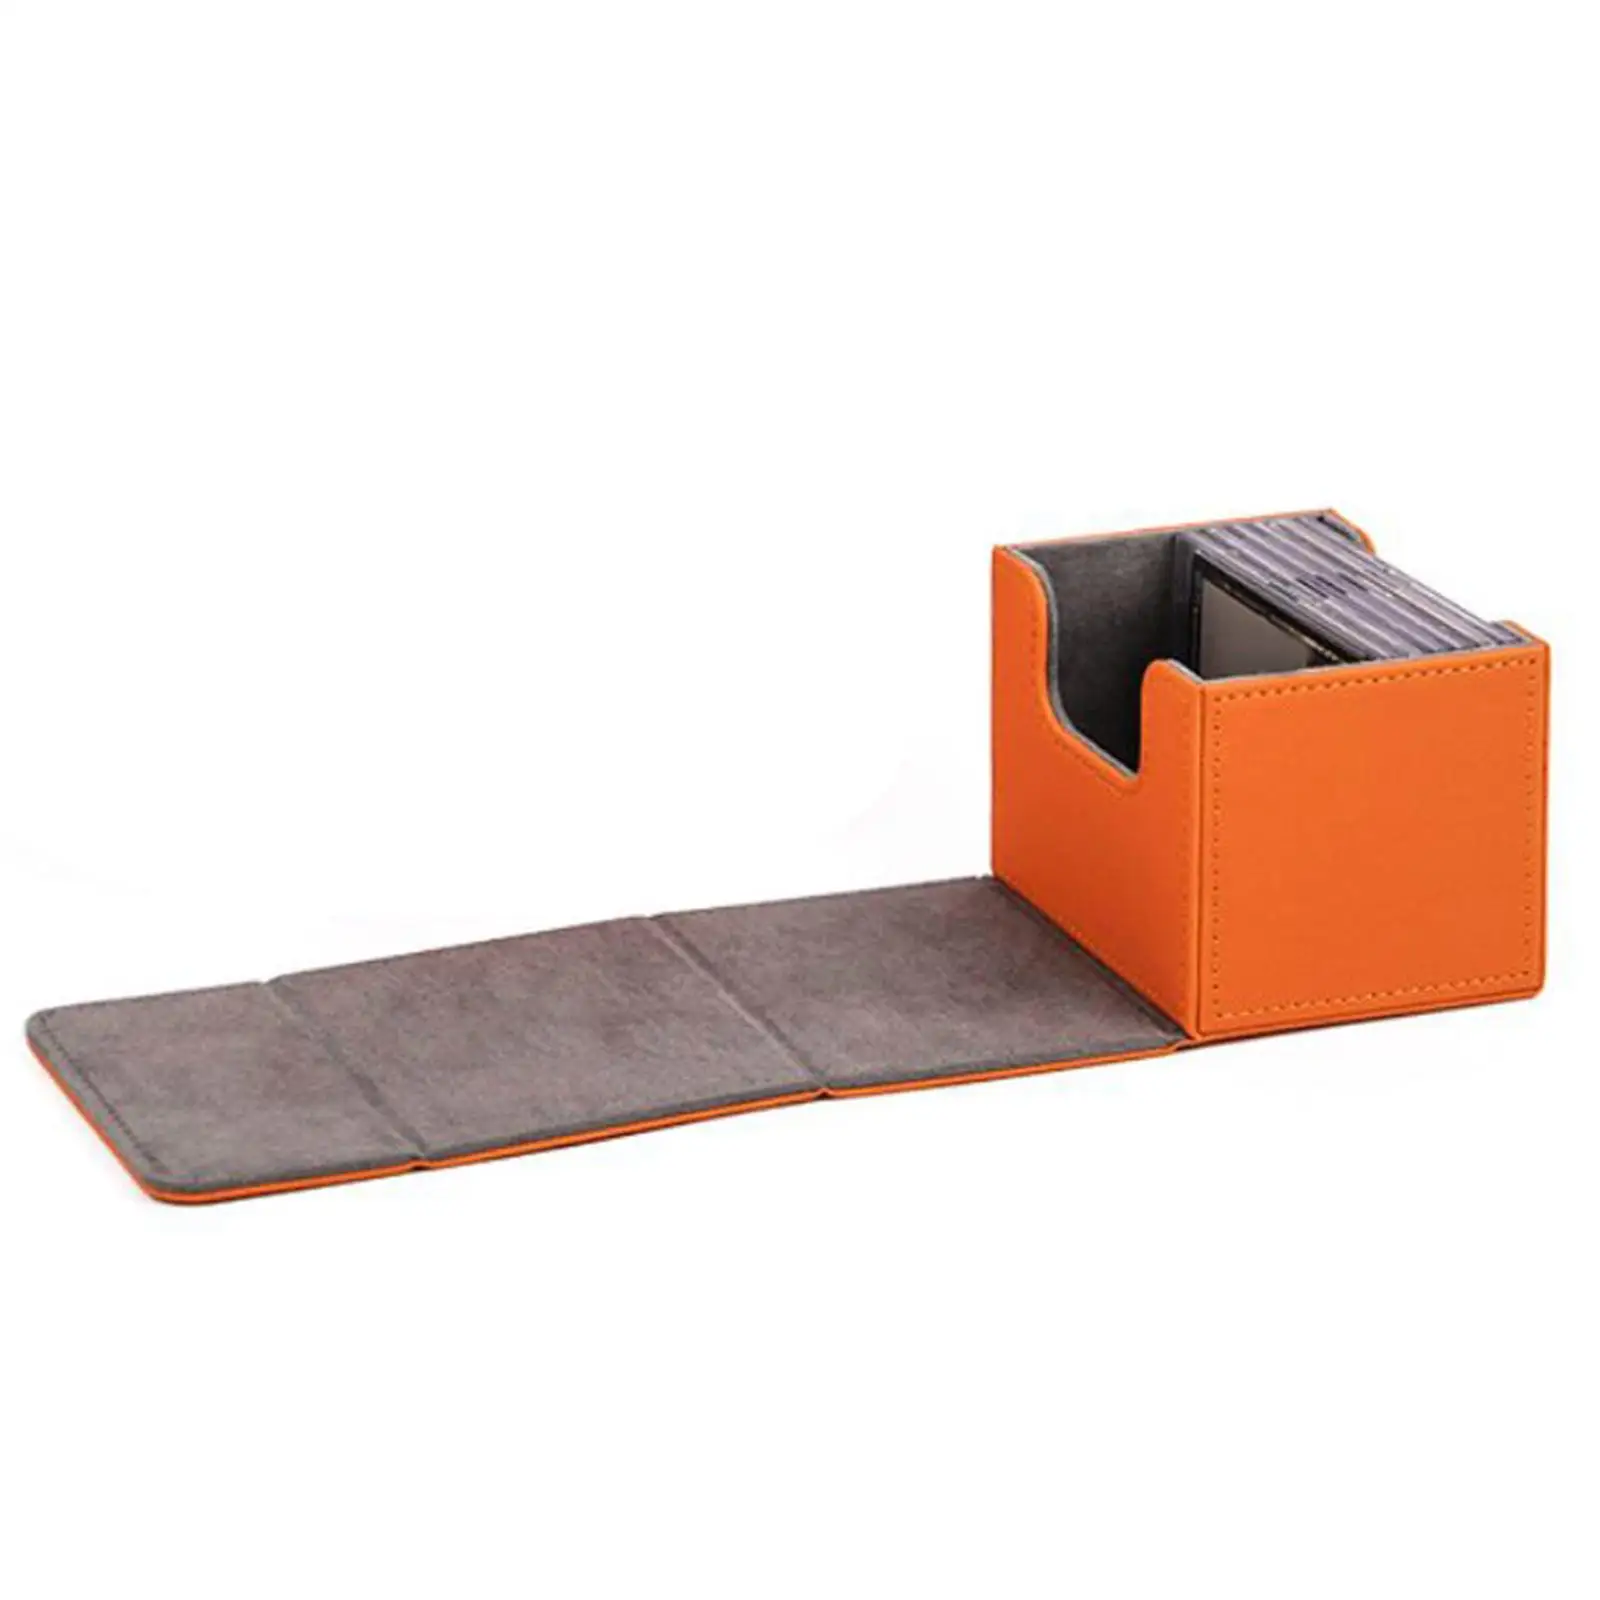 Large Card Deck Box Storage Organizer Holder W/ Magnet Closure Album Display